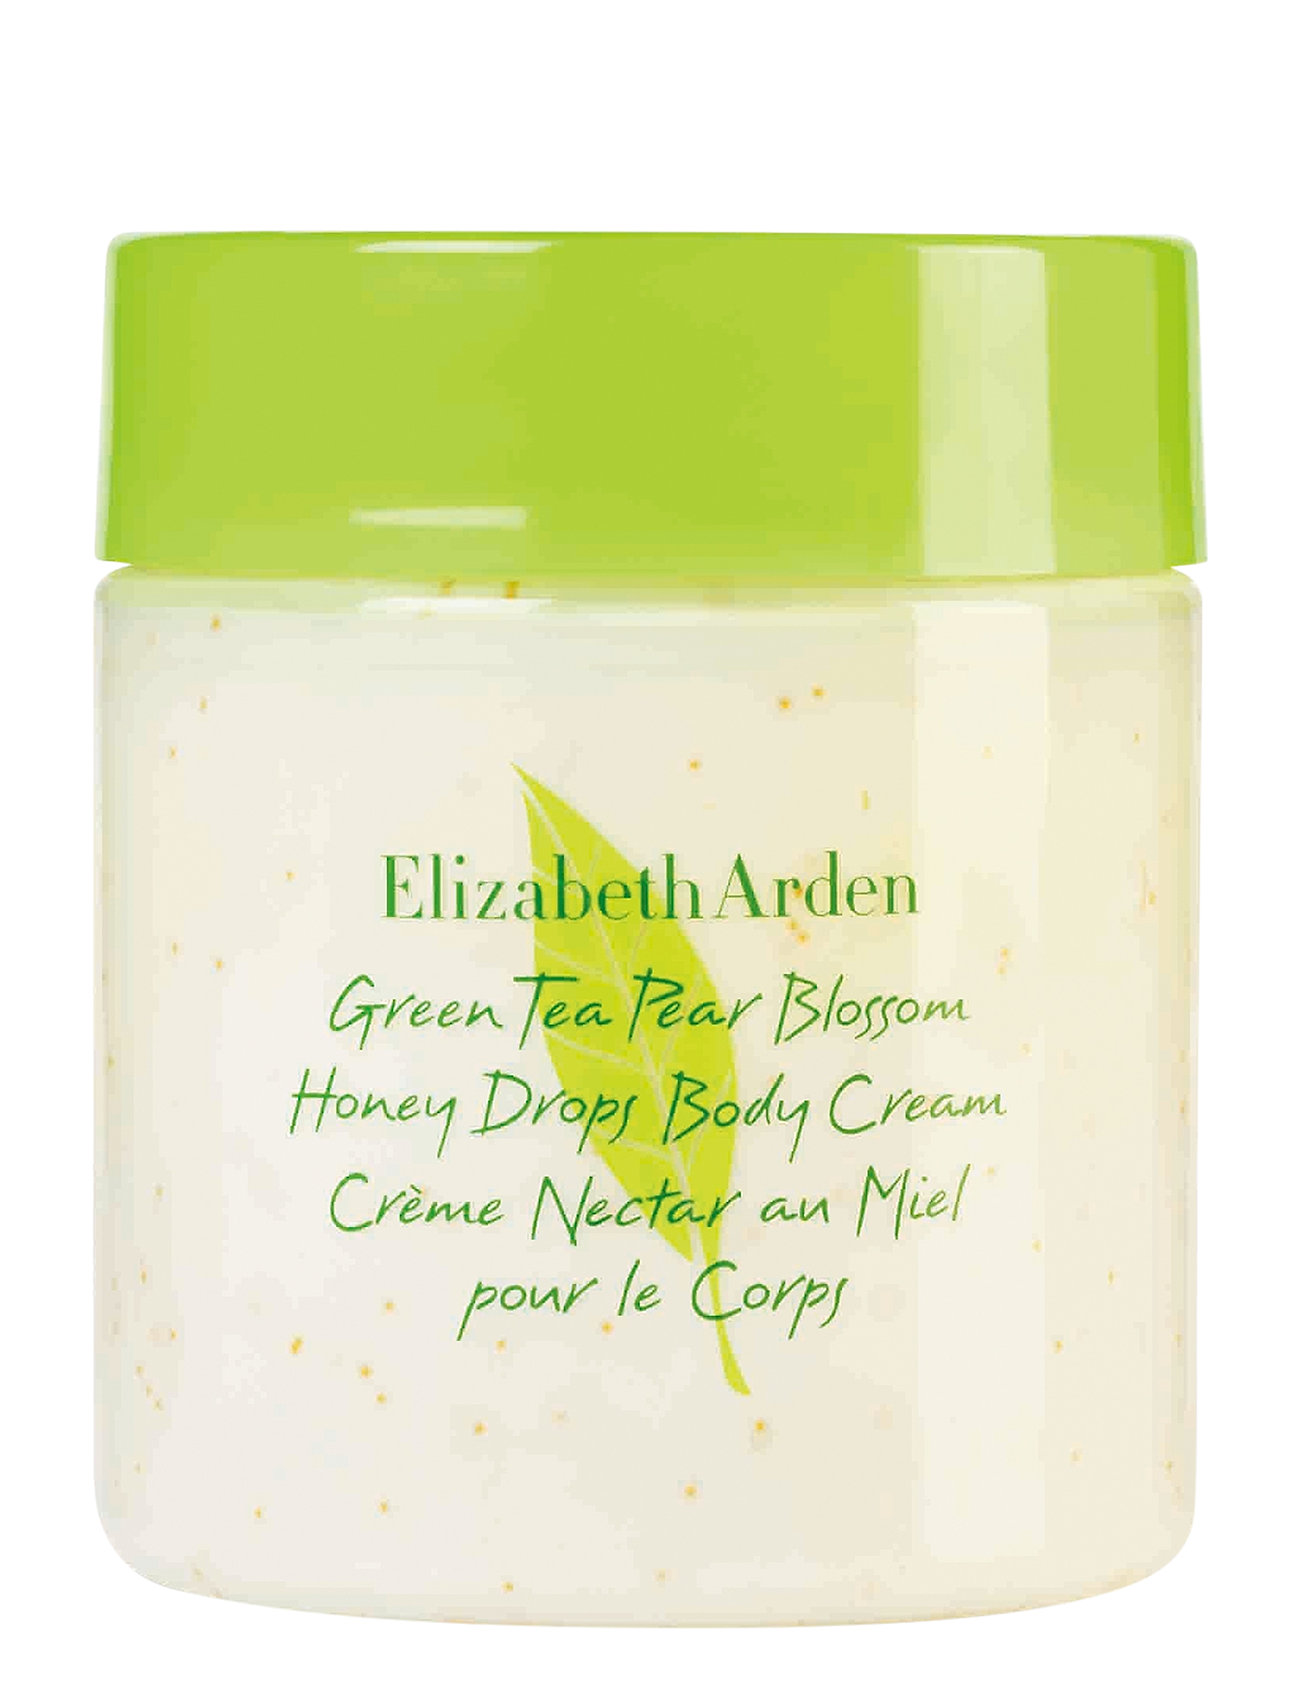 Green Tea Pear Blossom H Y Drops Body Cream Beauty WOMEN Skin Care Body Body Cream Nude Elizabeth Arden